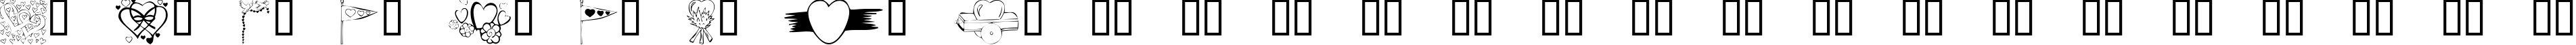 Пример написания английского алфавита шрифтом KR Valentines 2006 Nine